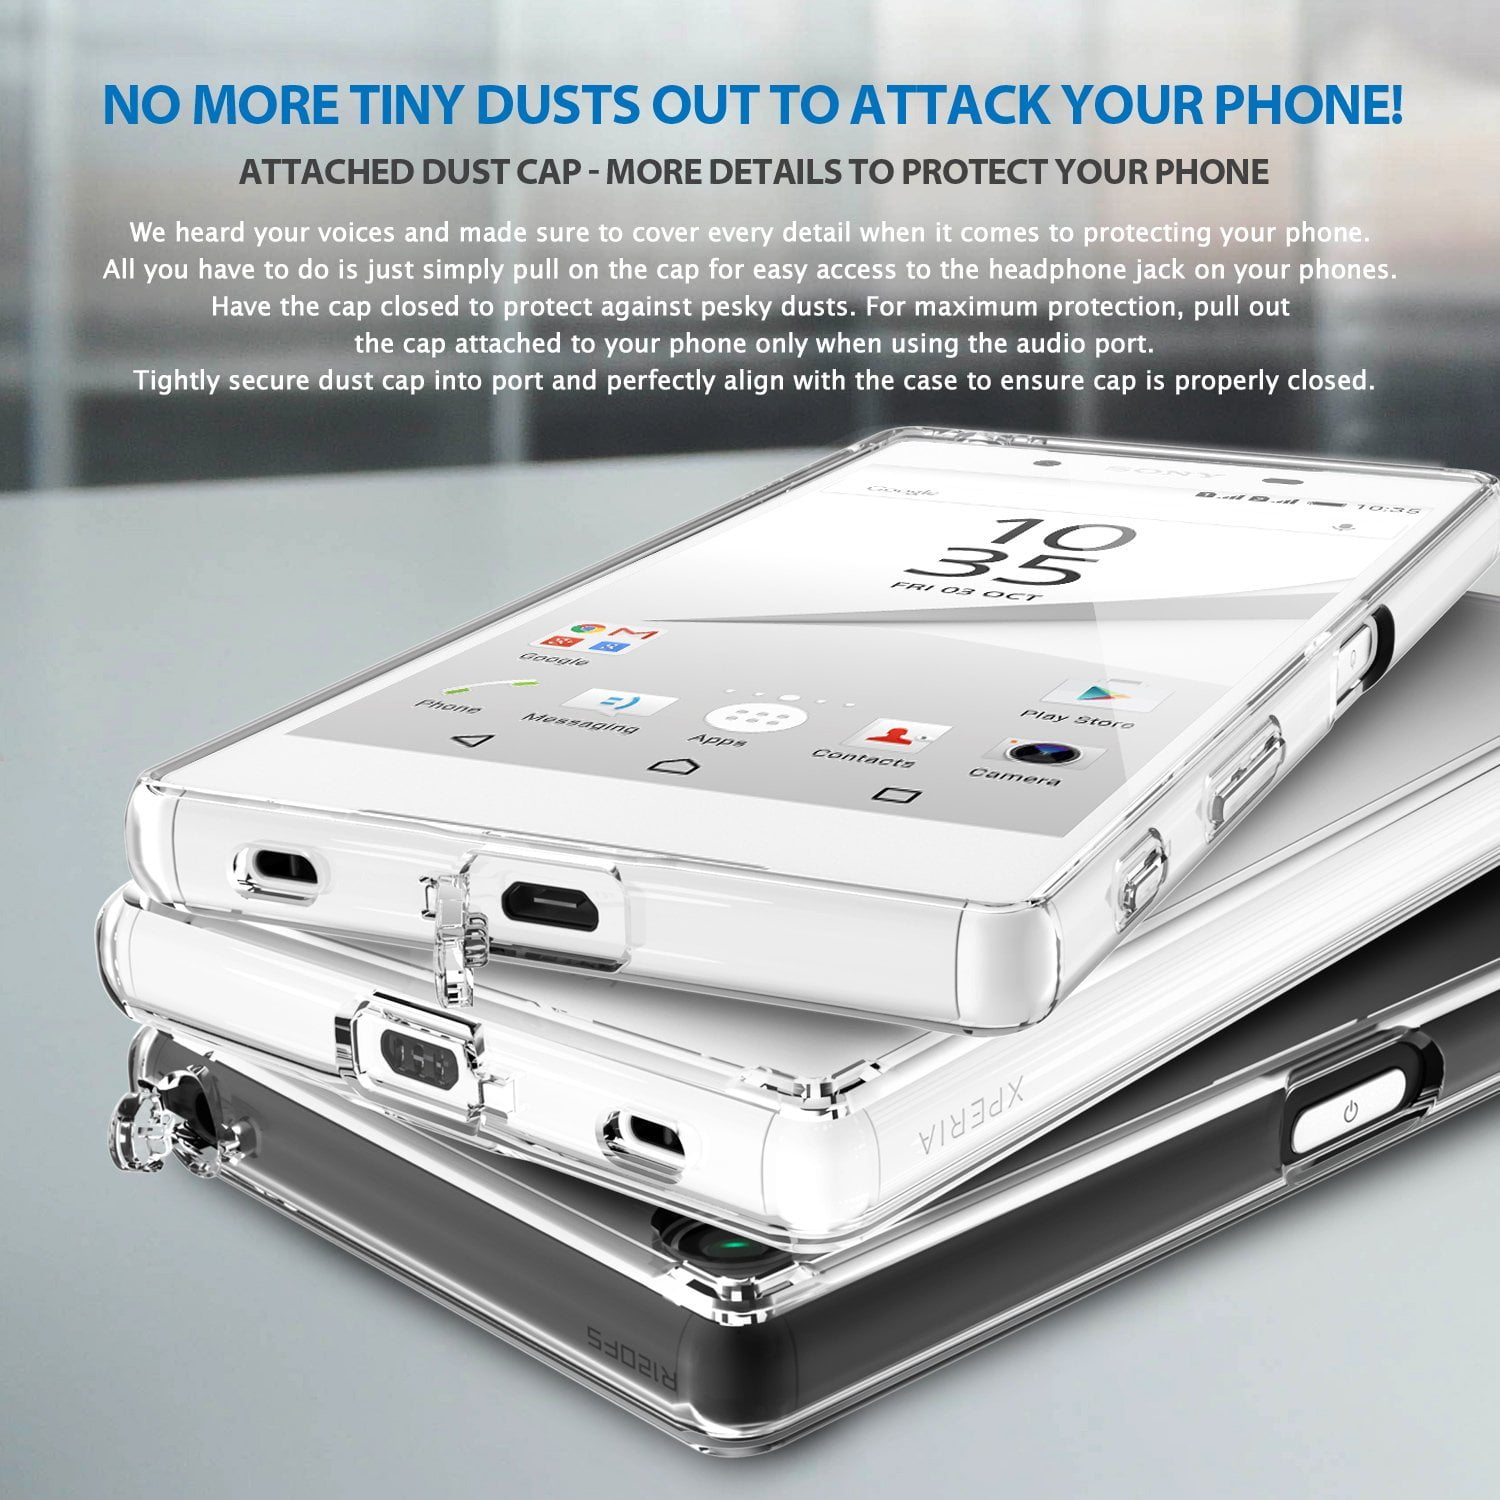 Uiterlijk Zoeken Fondsen Sony Xperia Z5 Compact Case, Ringke FUSION Series [Smoke Black] Shock  Absorption Premium Clear Hard Case - Walmart.com